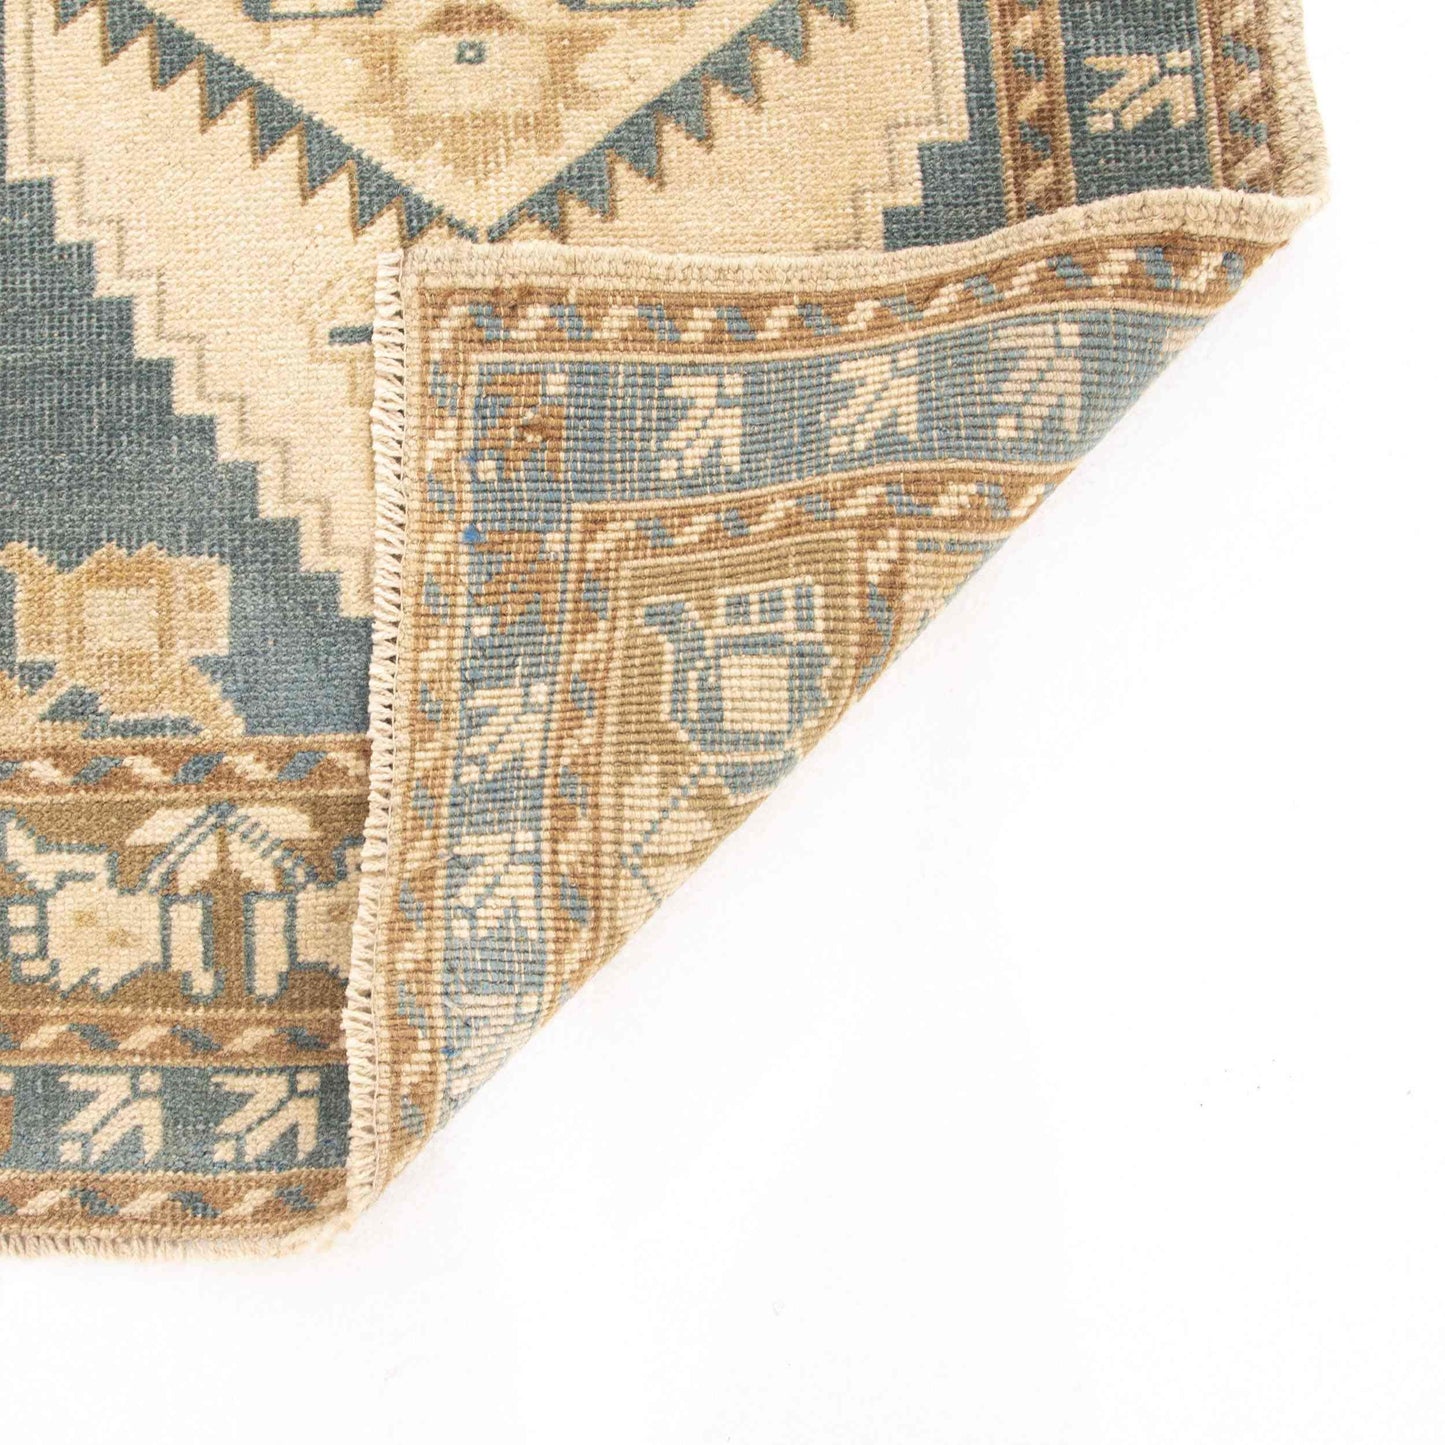 Oriental Rug Anatolian Handwoven Wool On Wool 58 x 110 Cm - 1' 11'' x 3' 8'' Sand C007 ER01